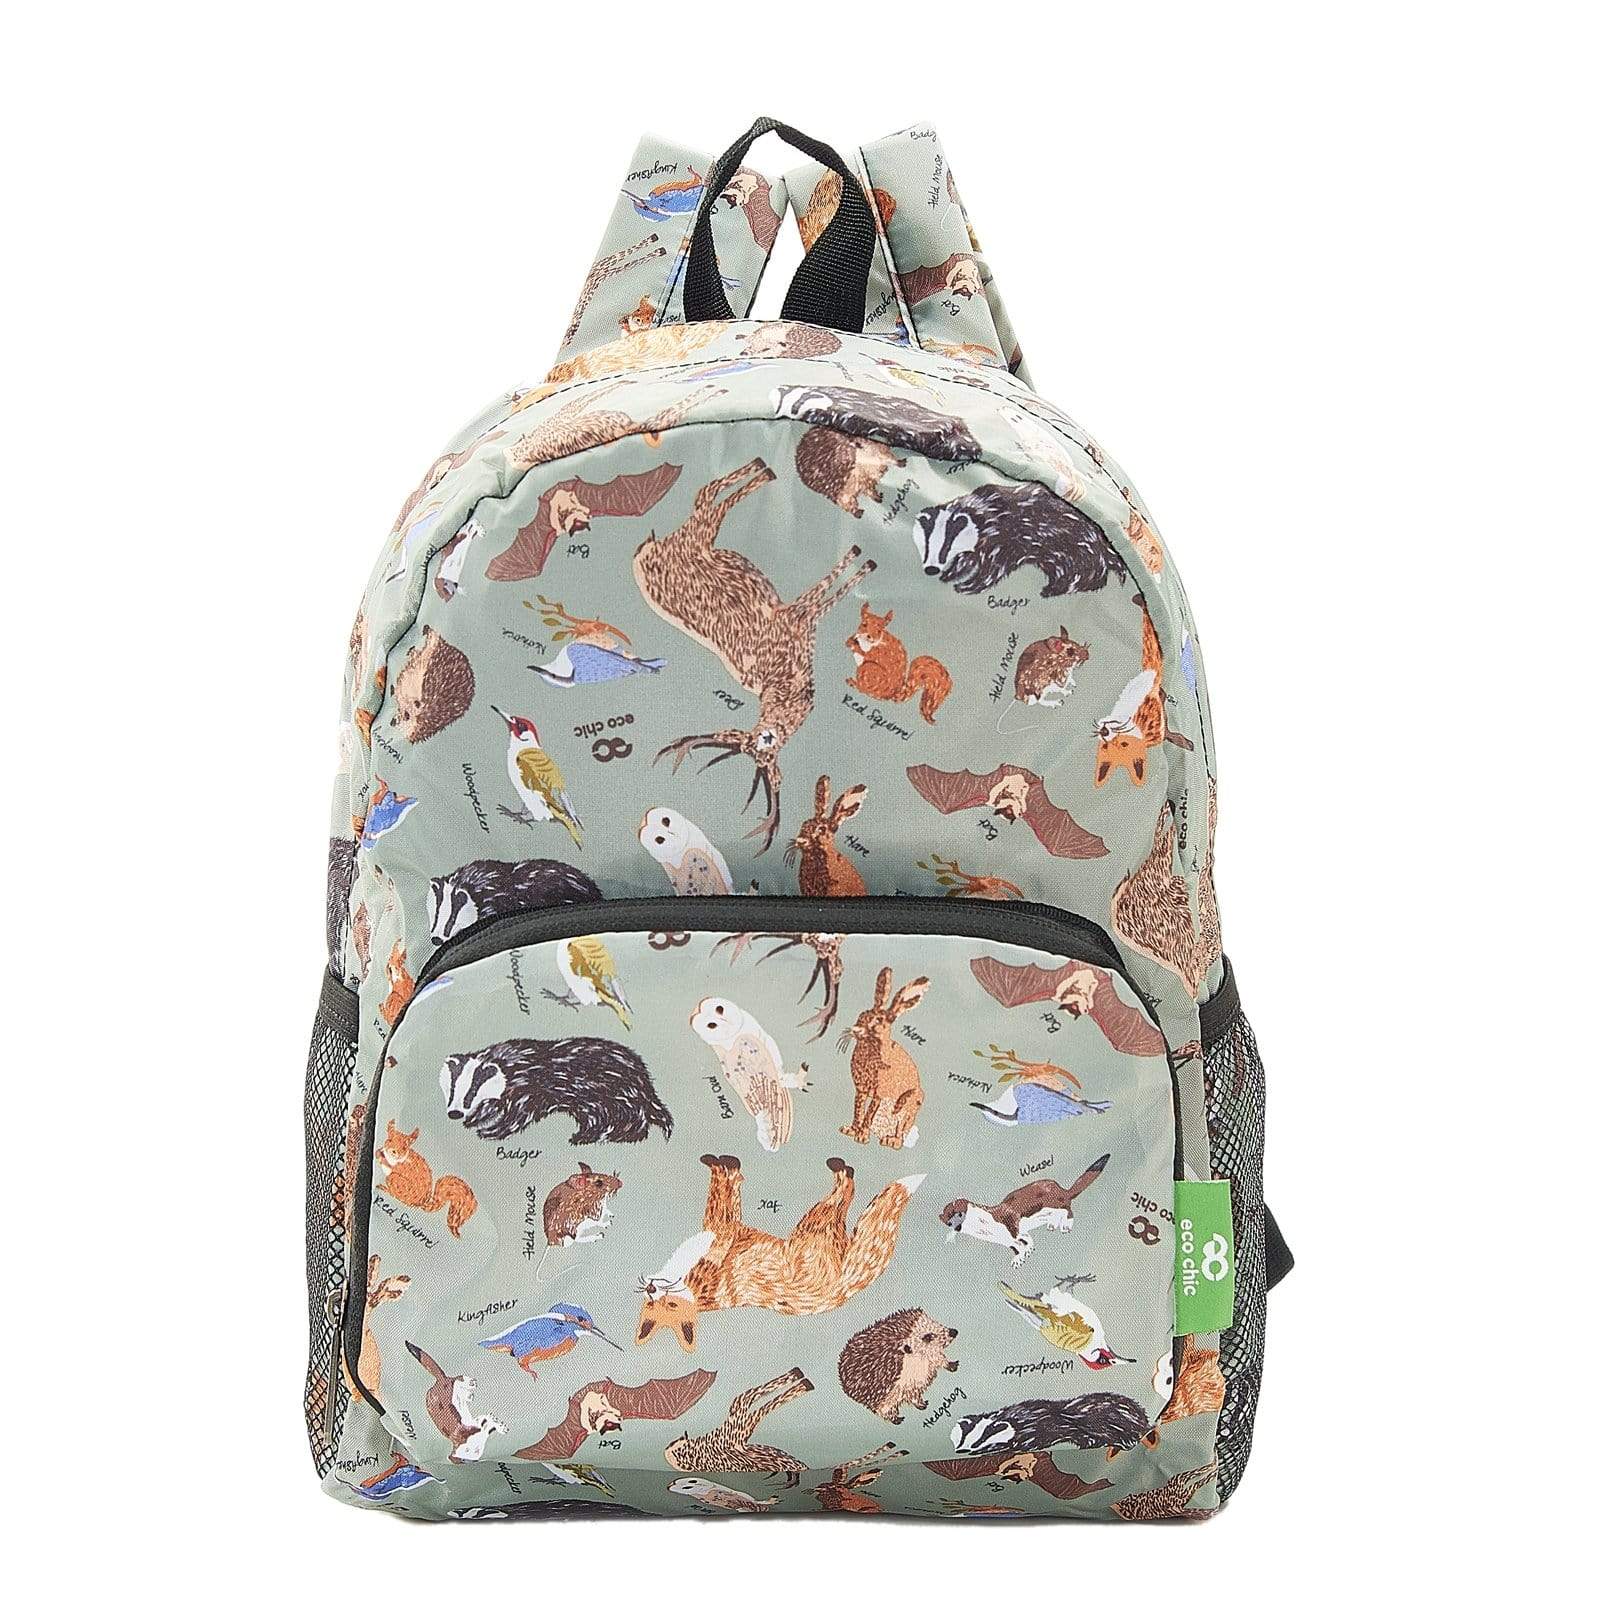 Foldable Bags – Eco Chic Retail Ltd